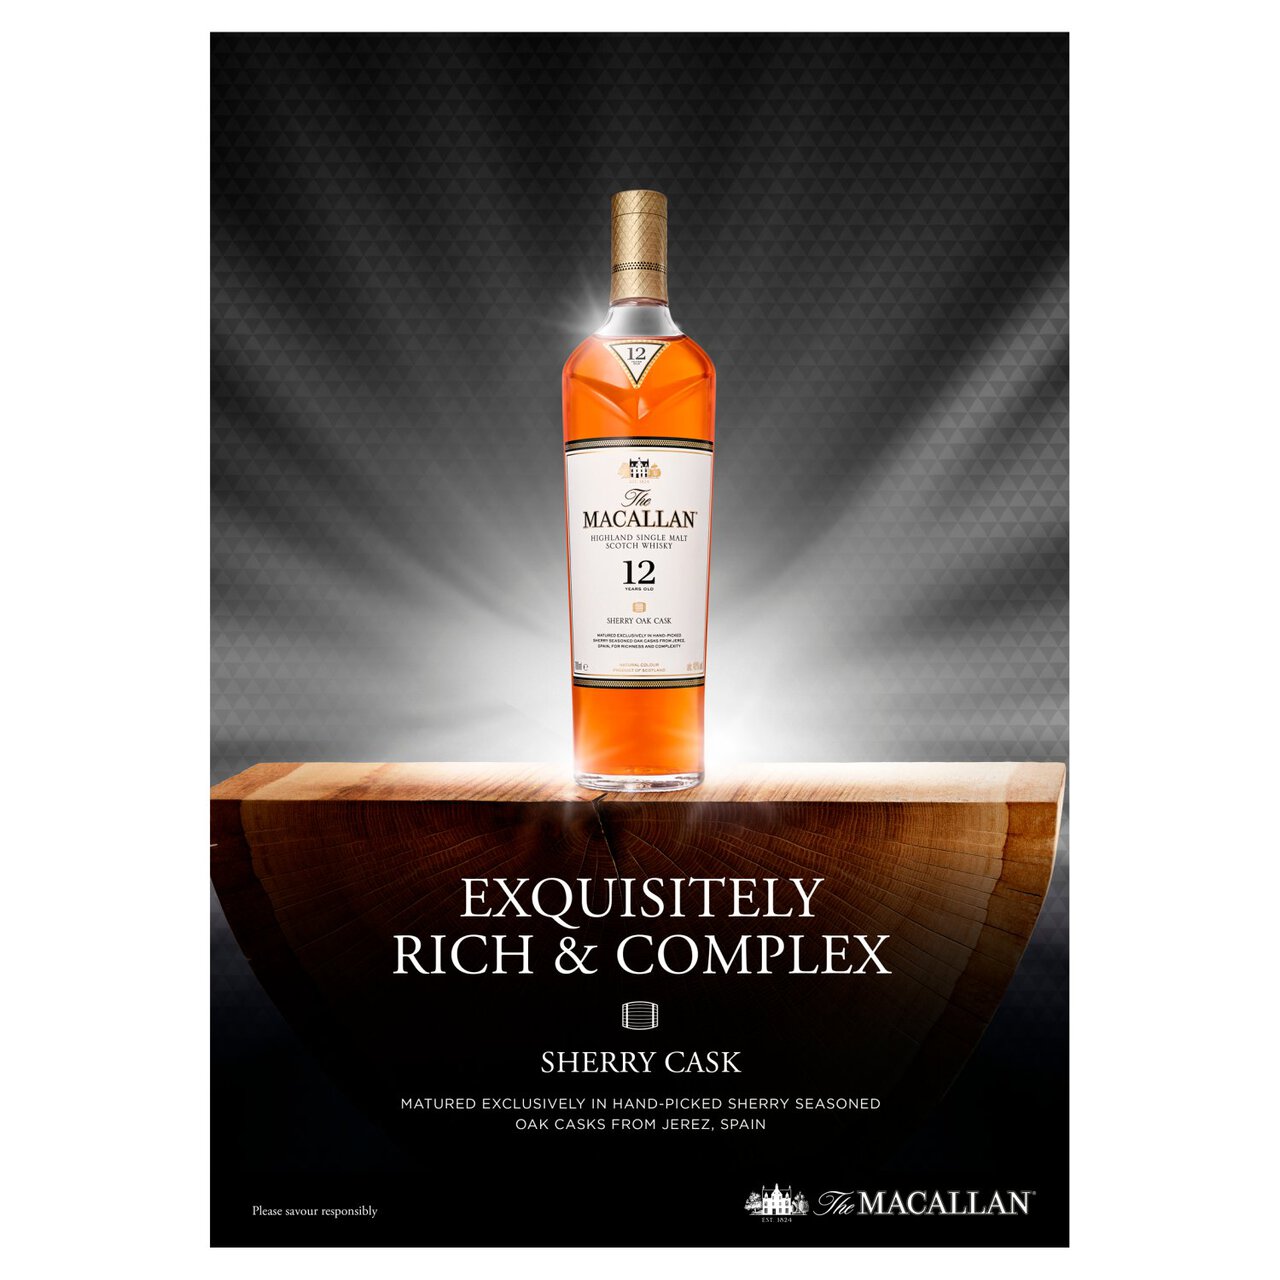 The Macallan 12 Year Old Sherry Oak Single Malt Whisky 70cl